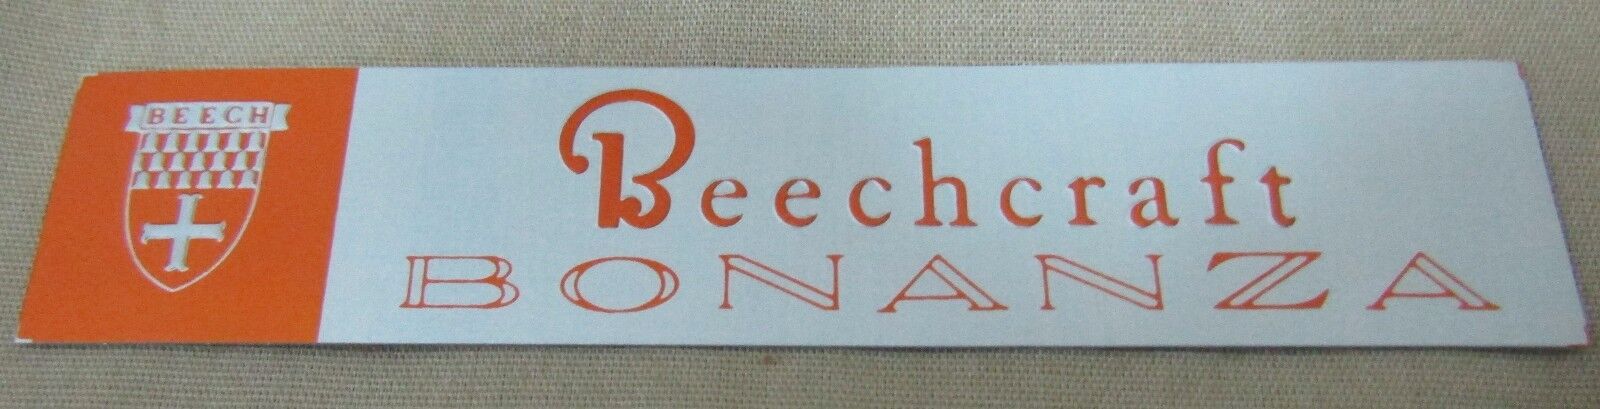 Beechcraft - Bonanza - Emblem - Part Number 35-534440-13